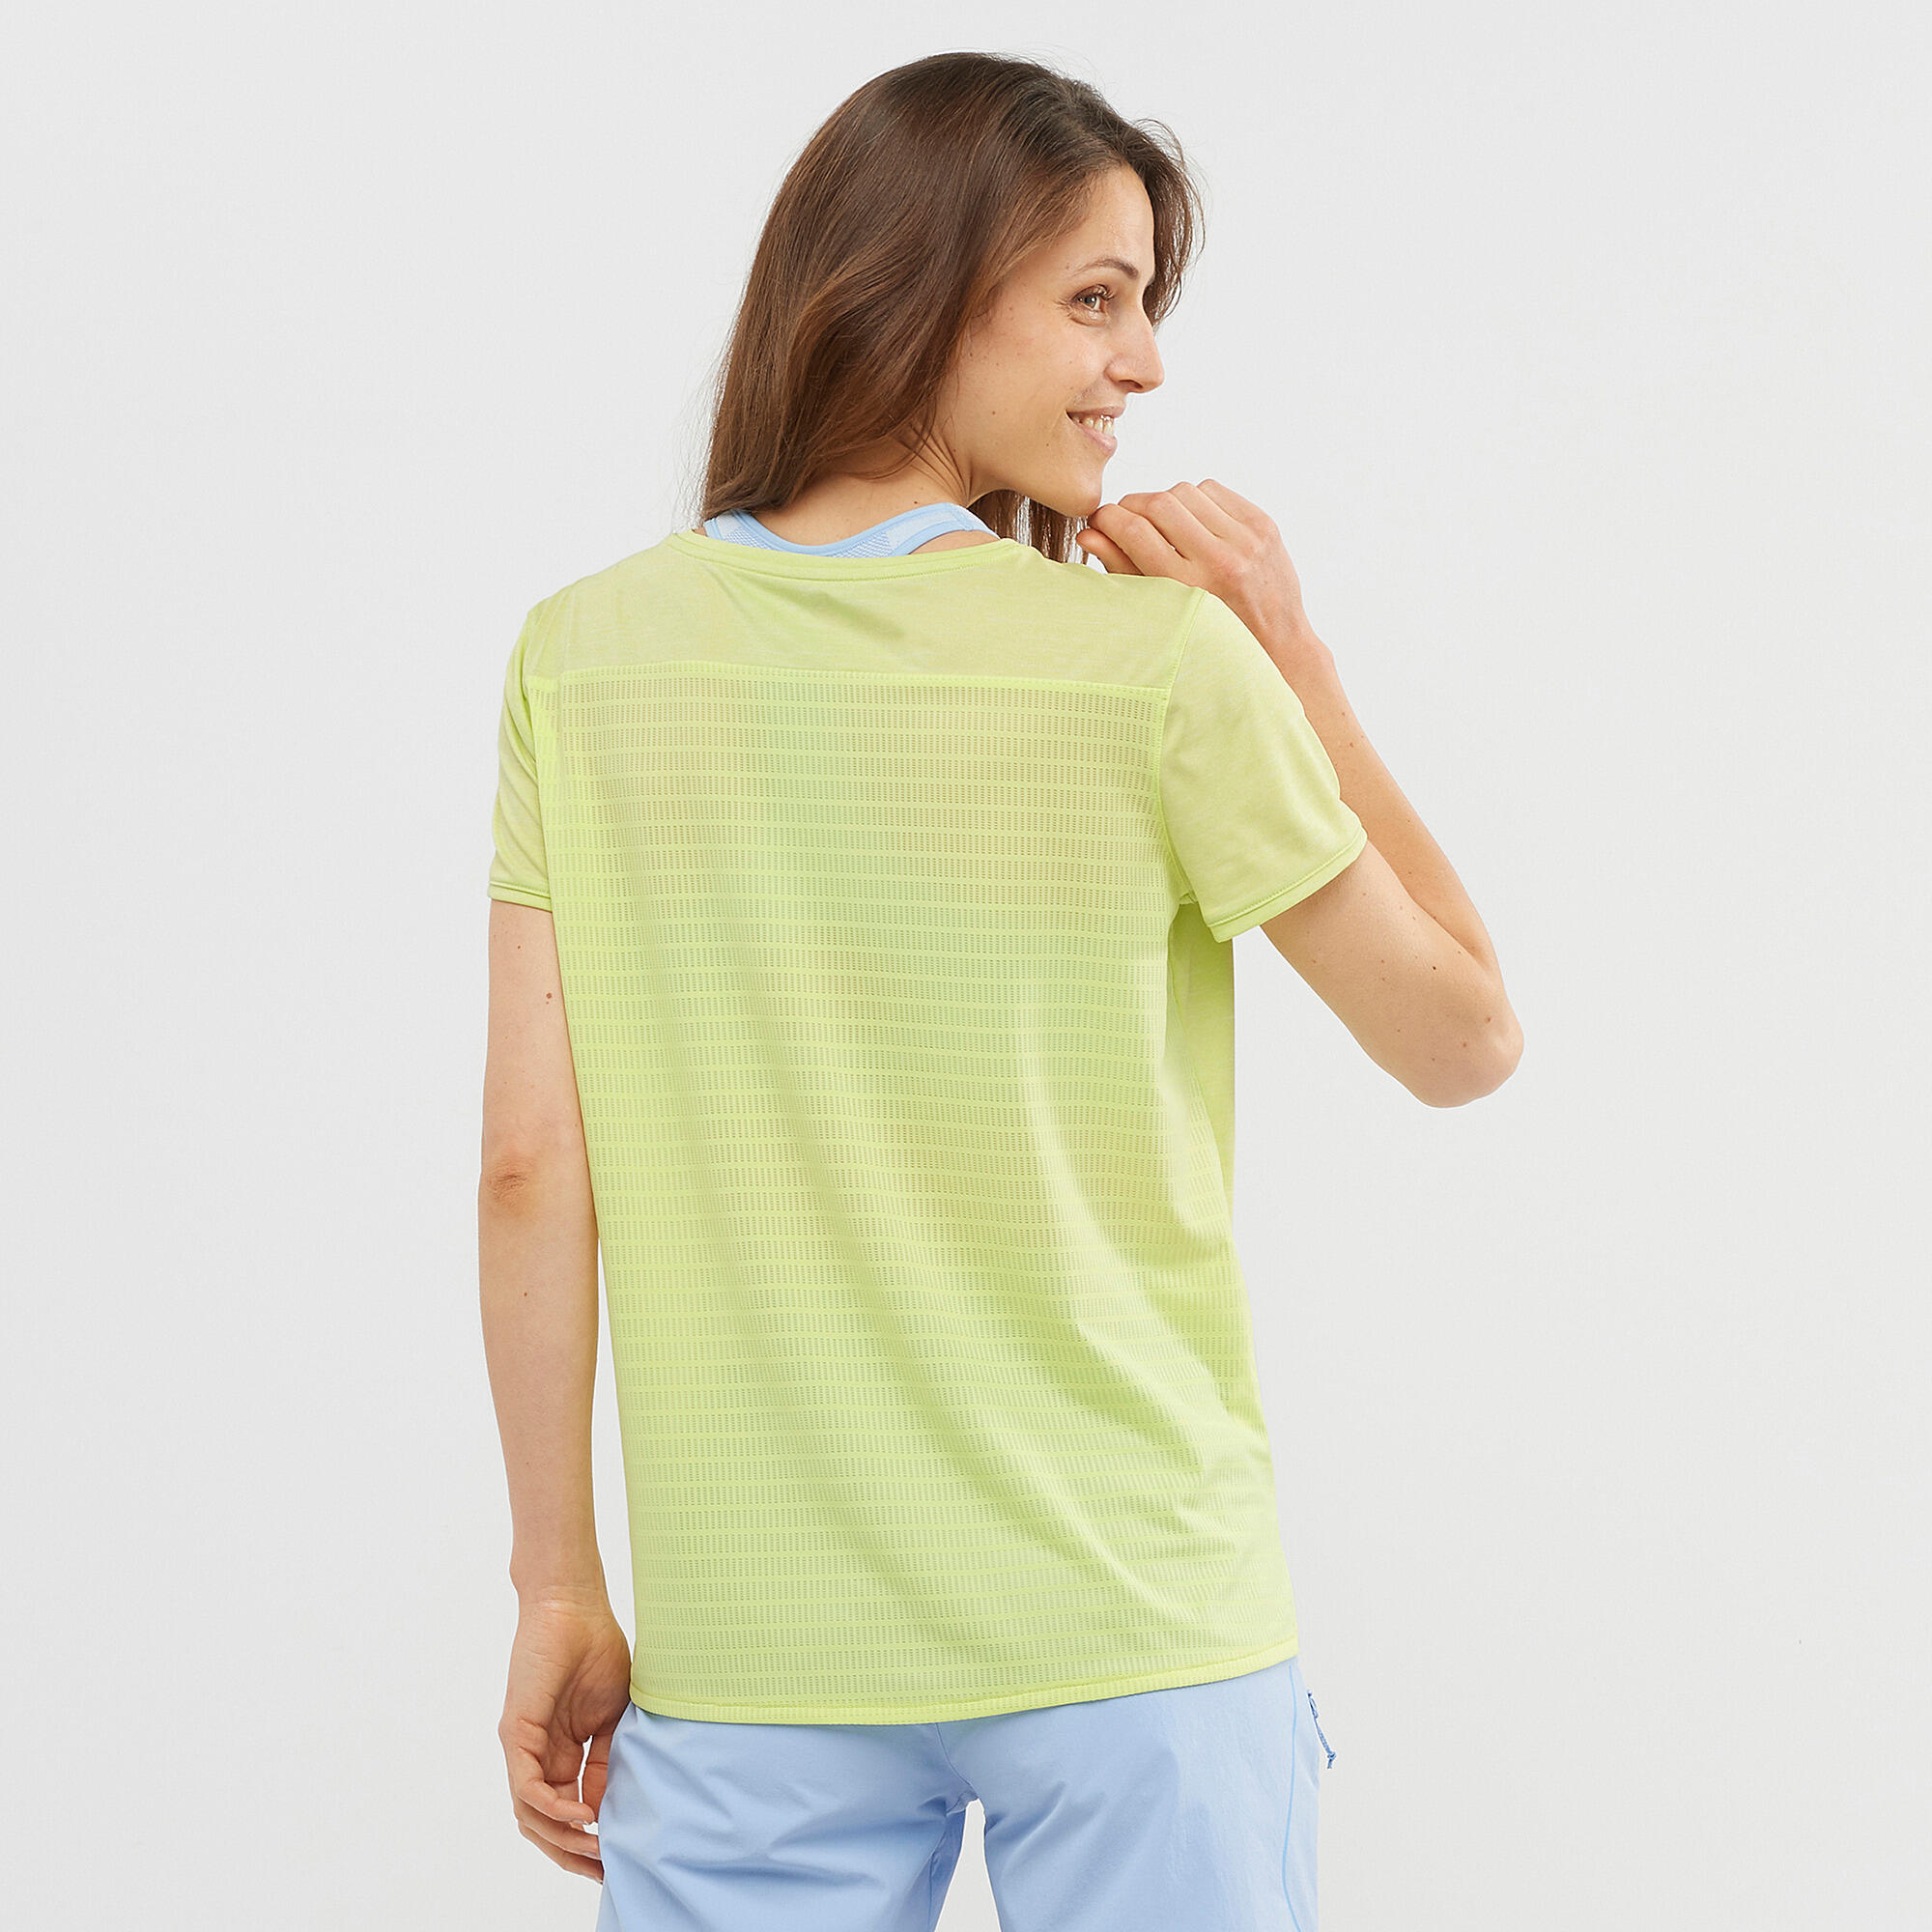 The women's OUTLINE SUMMER t-shirt combines comfort, lightness